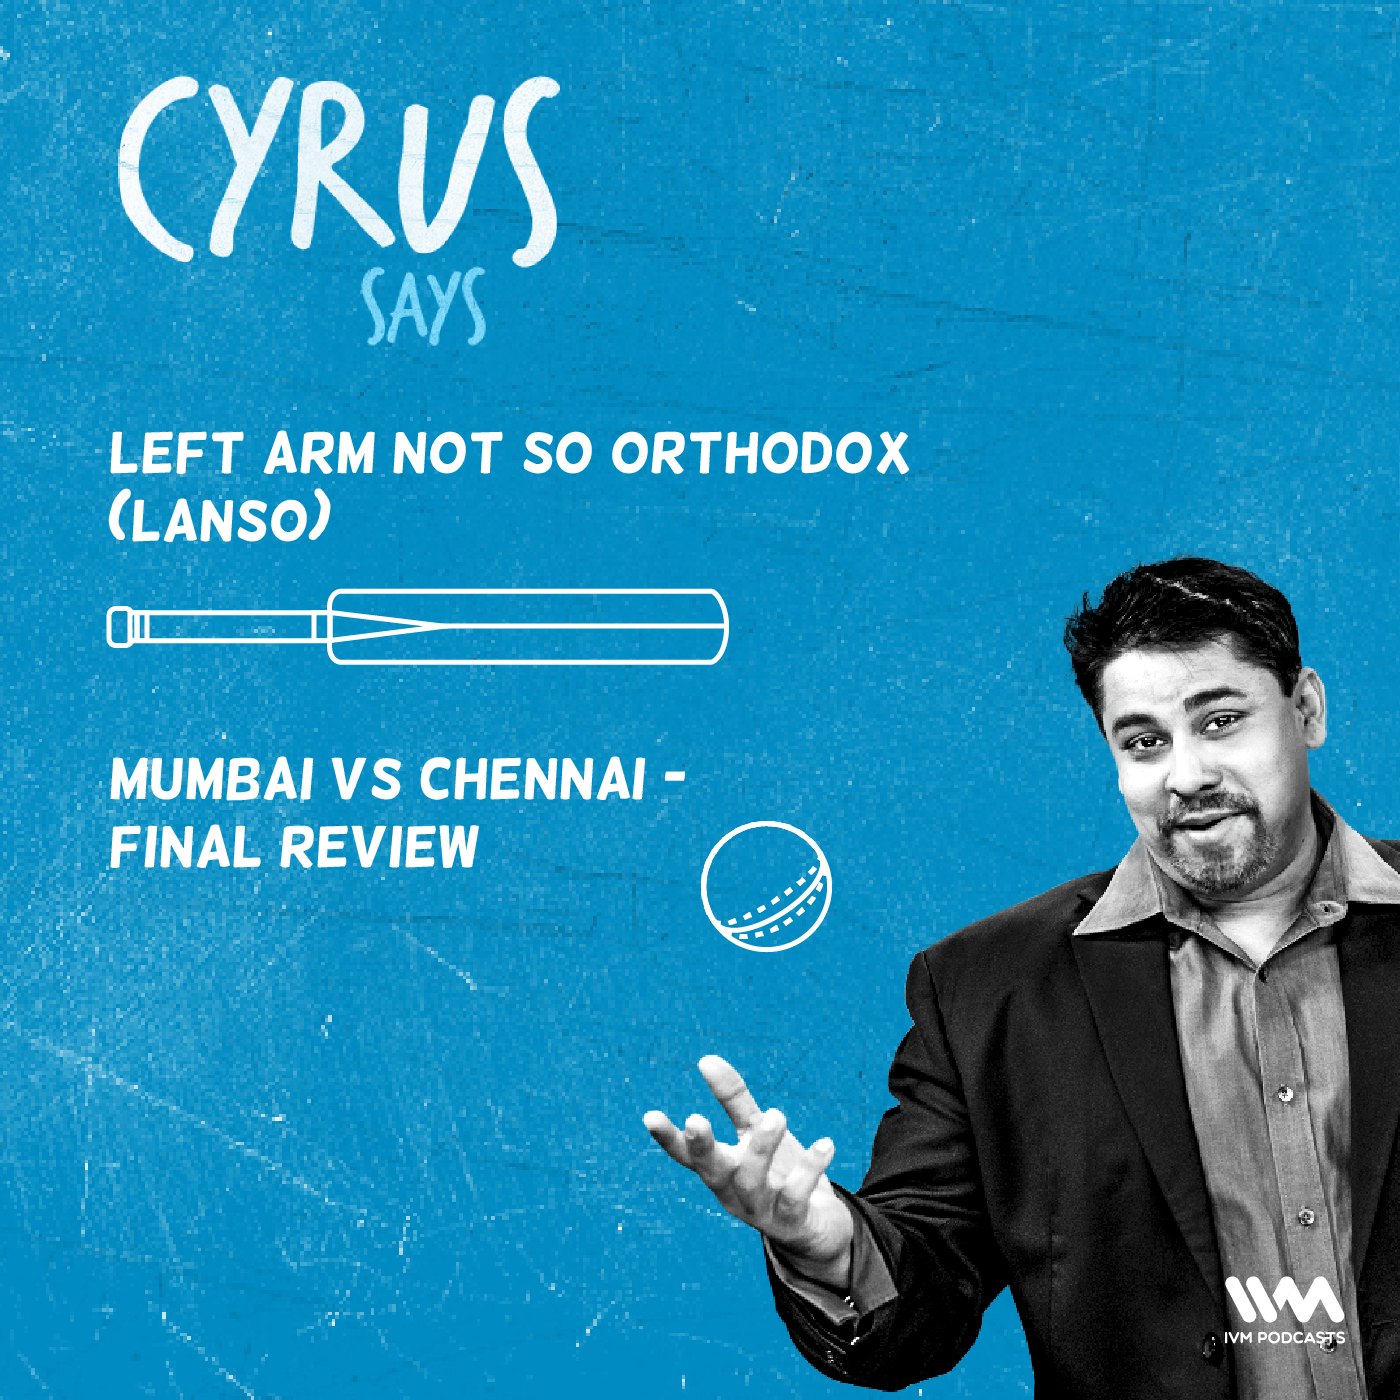 Ep. 373: LANSO: Mumbai vs Chennai - Final review